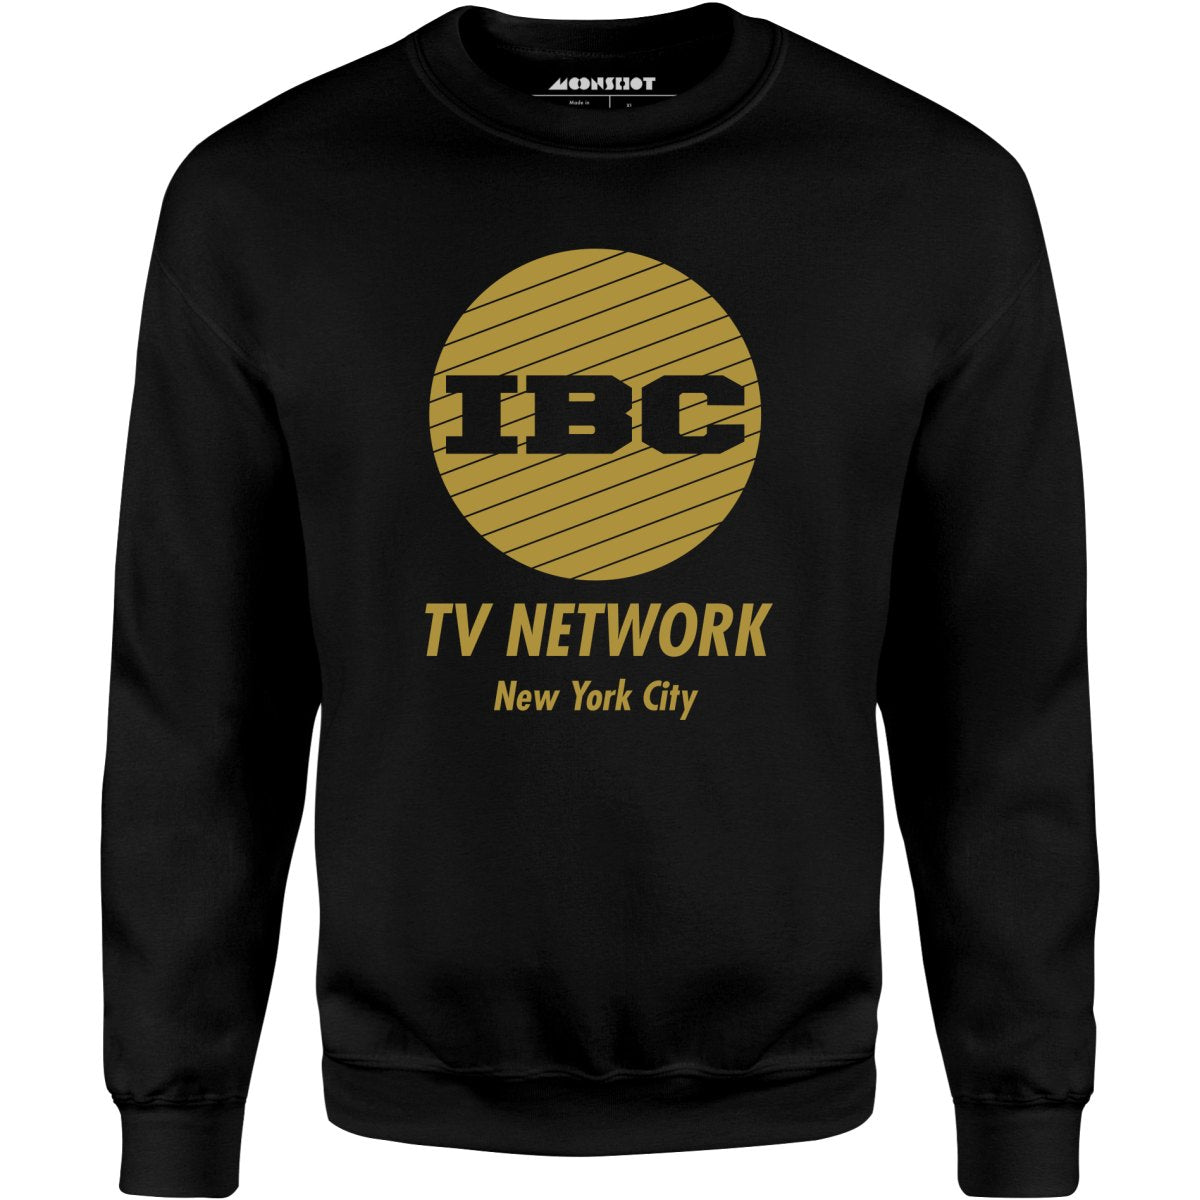 IBC TV Network - Scrooged - Unisex Sweatshirt